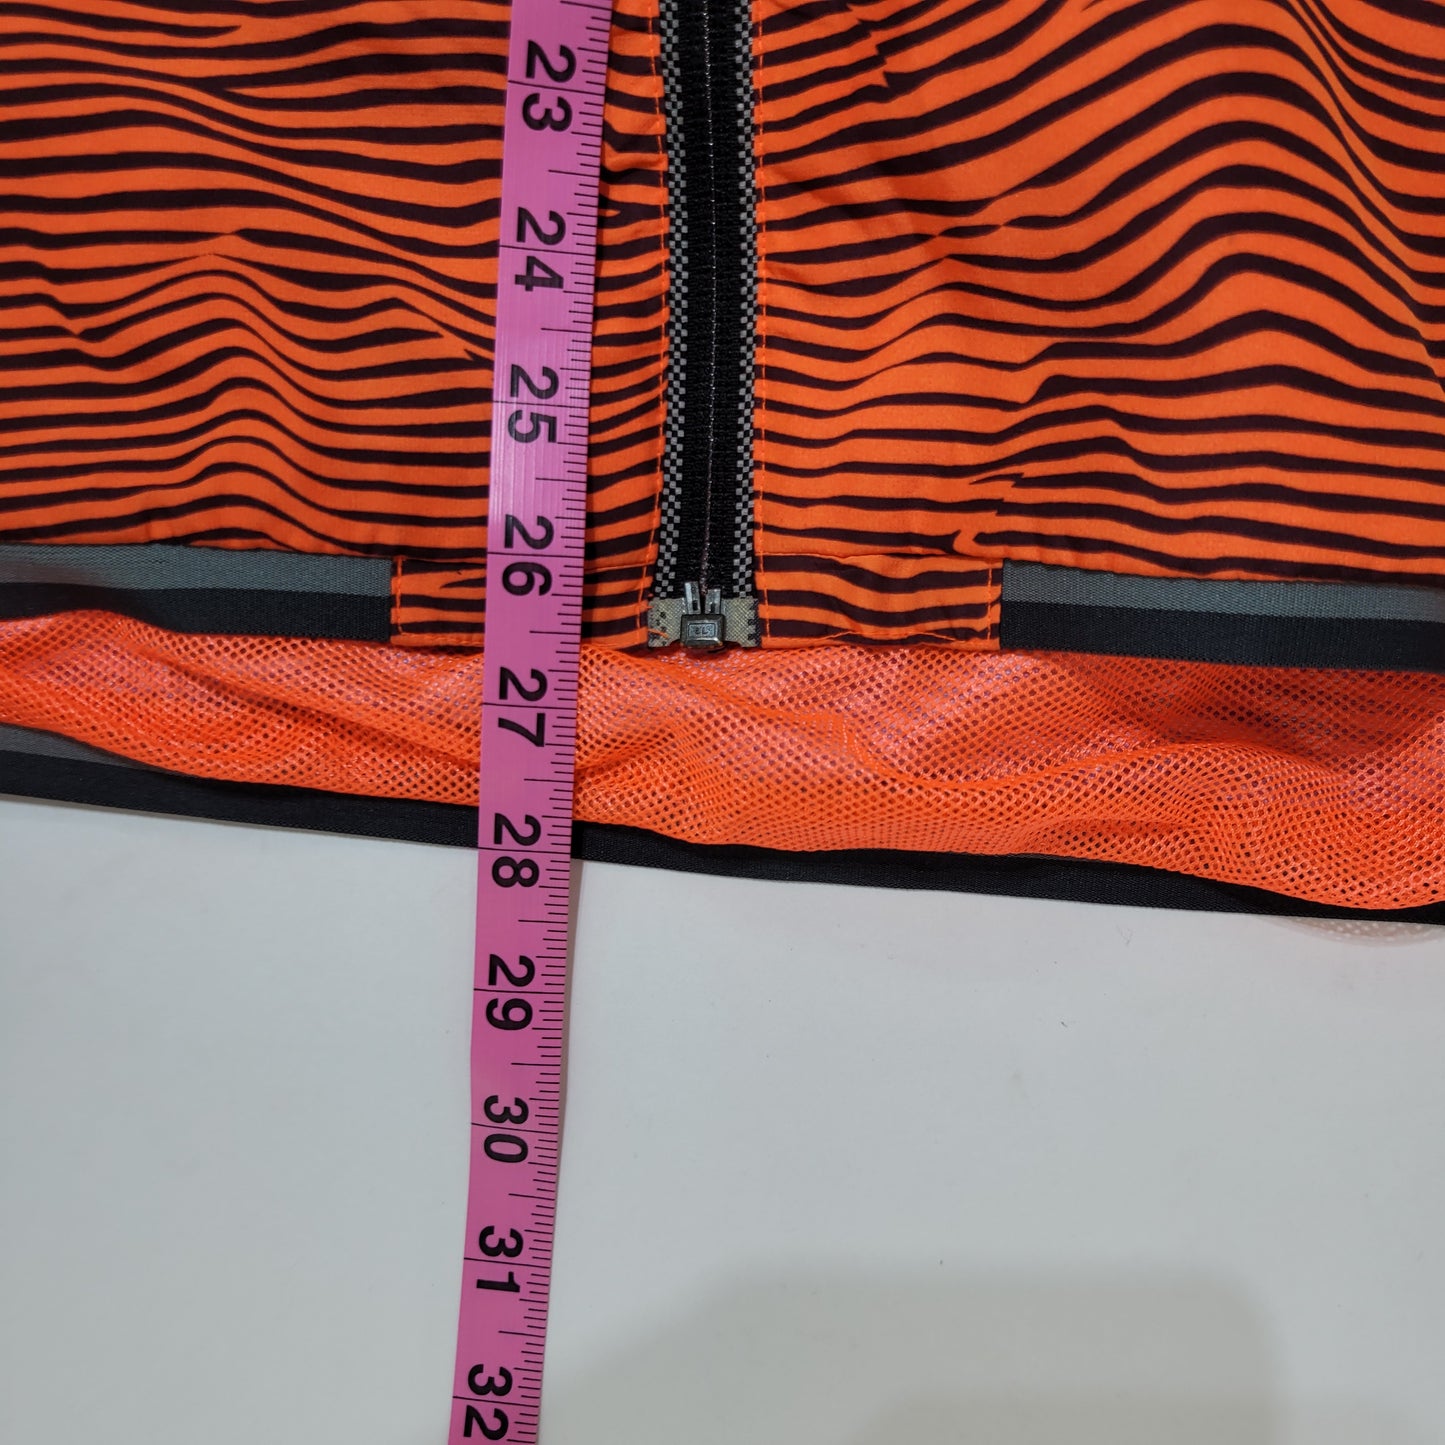 Adidas Men's Wind Breaker Striped Orange/Black - Size Large